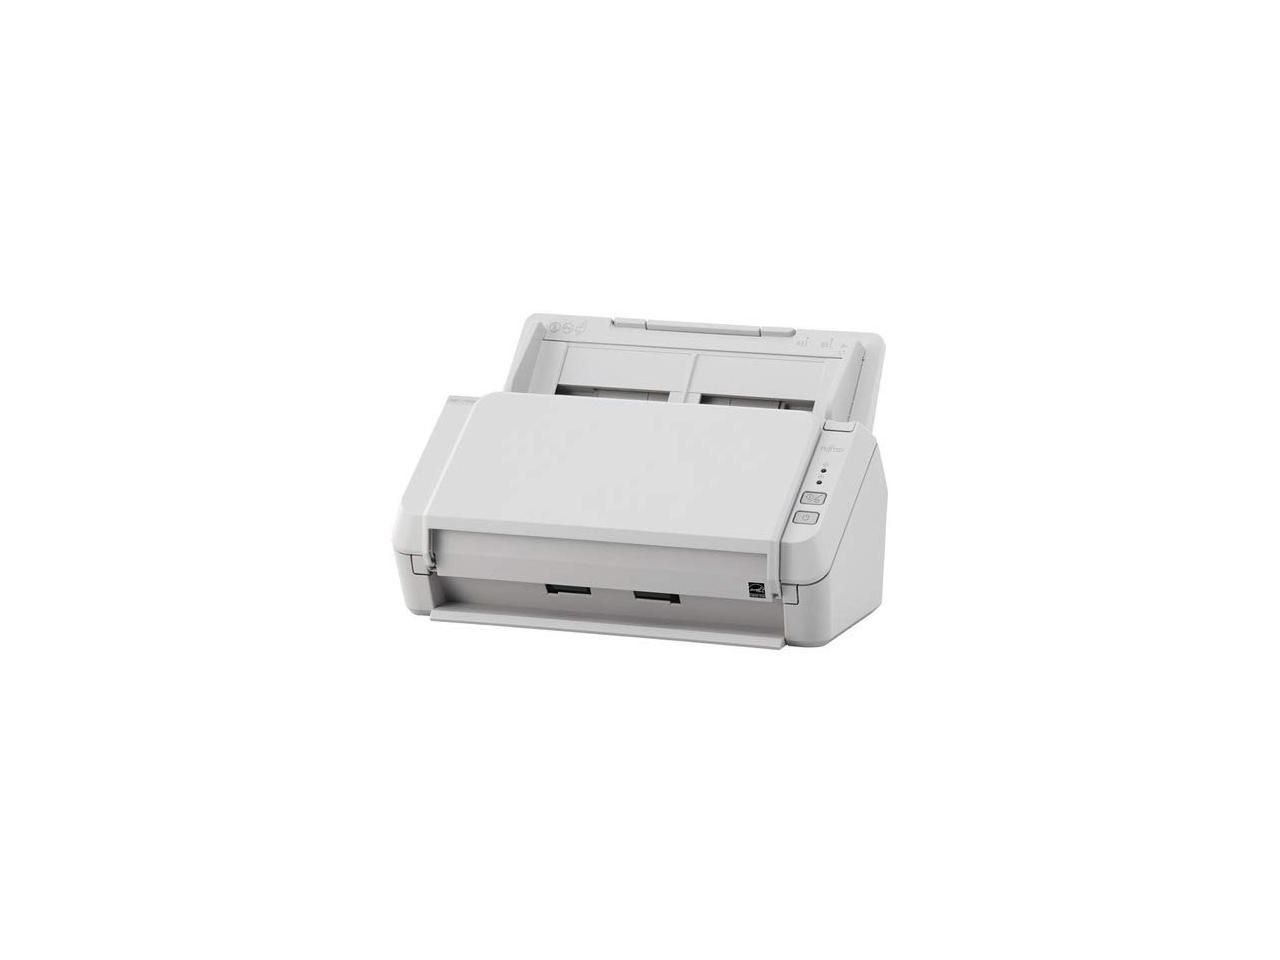 Fujitsu Image Scanner SP-1130N PA03811-B025 ADF (Automatic Document Feeder), Duplex Document Scanner